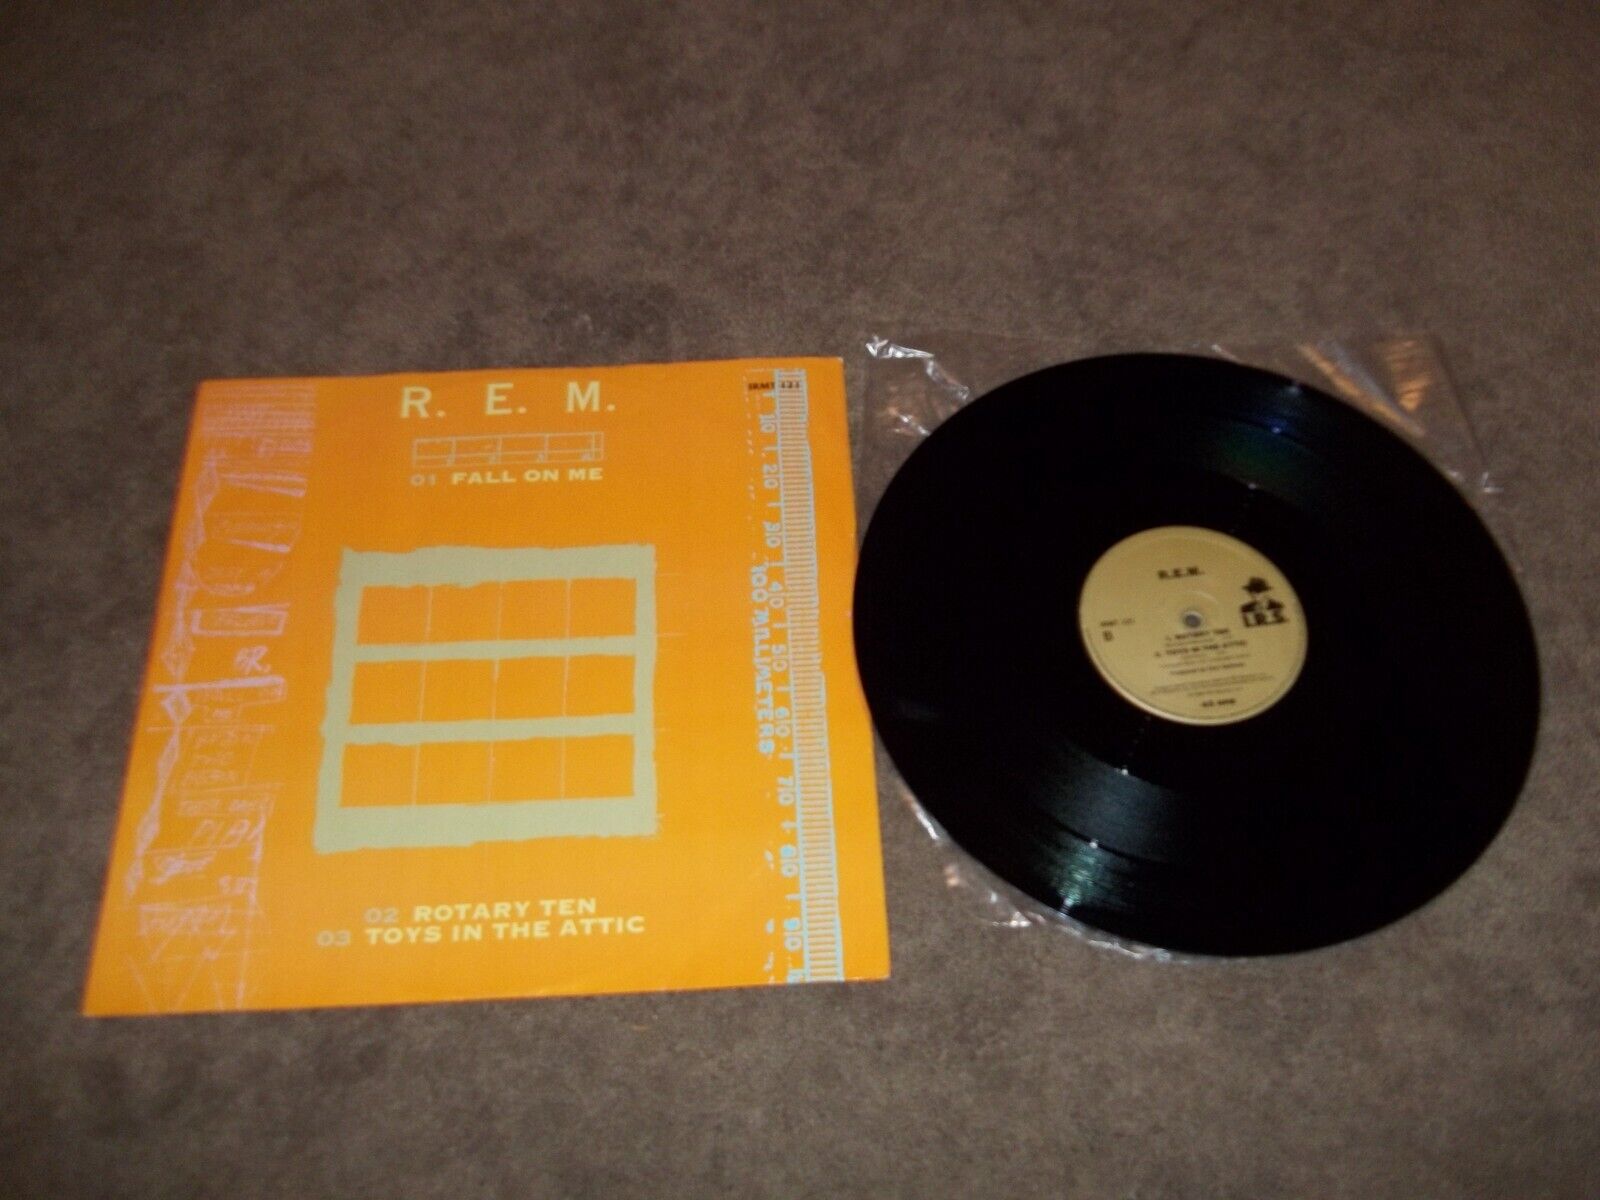 R.E.M. - Fall On Me 12" Single - 1986 -  UK Import - IRS Records IRMT 121